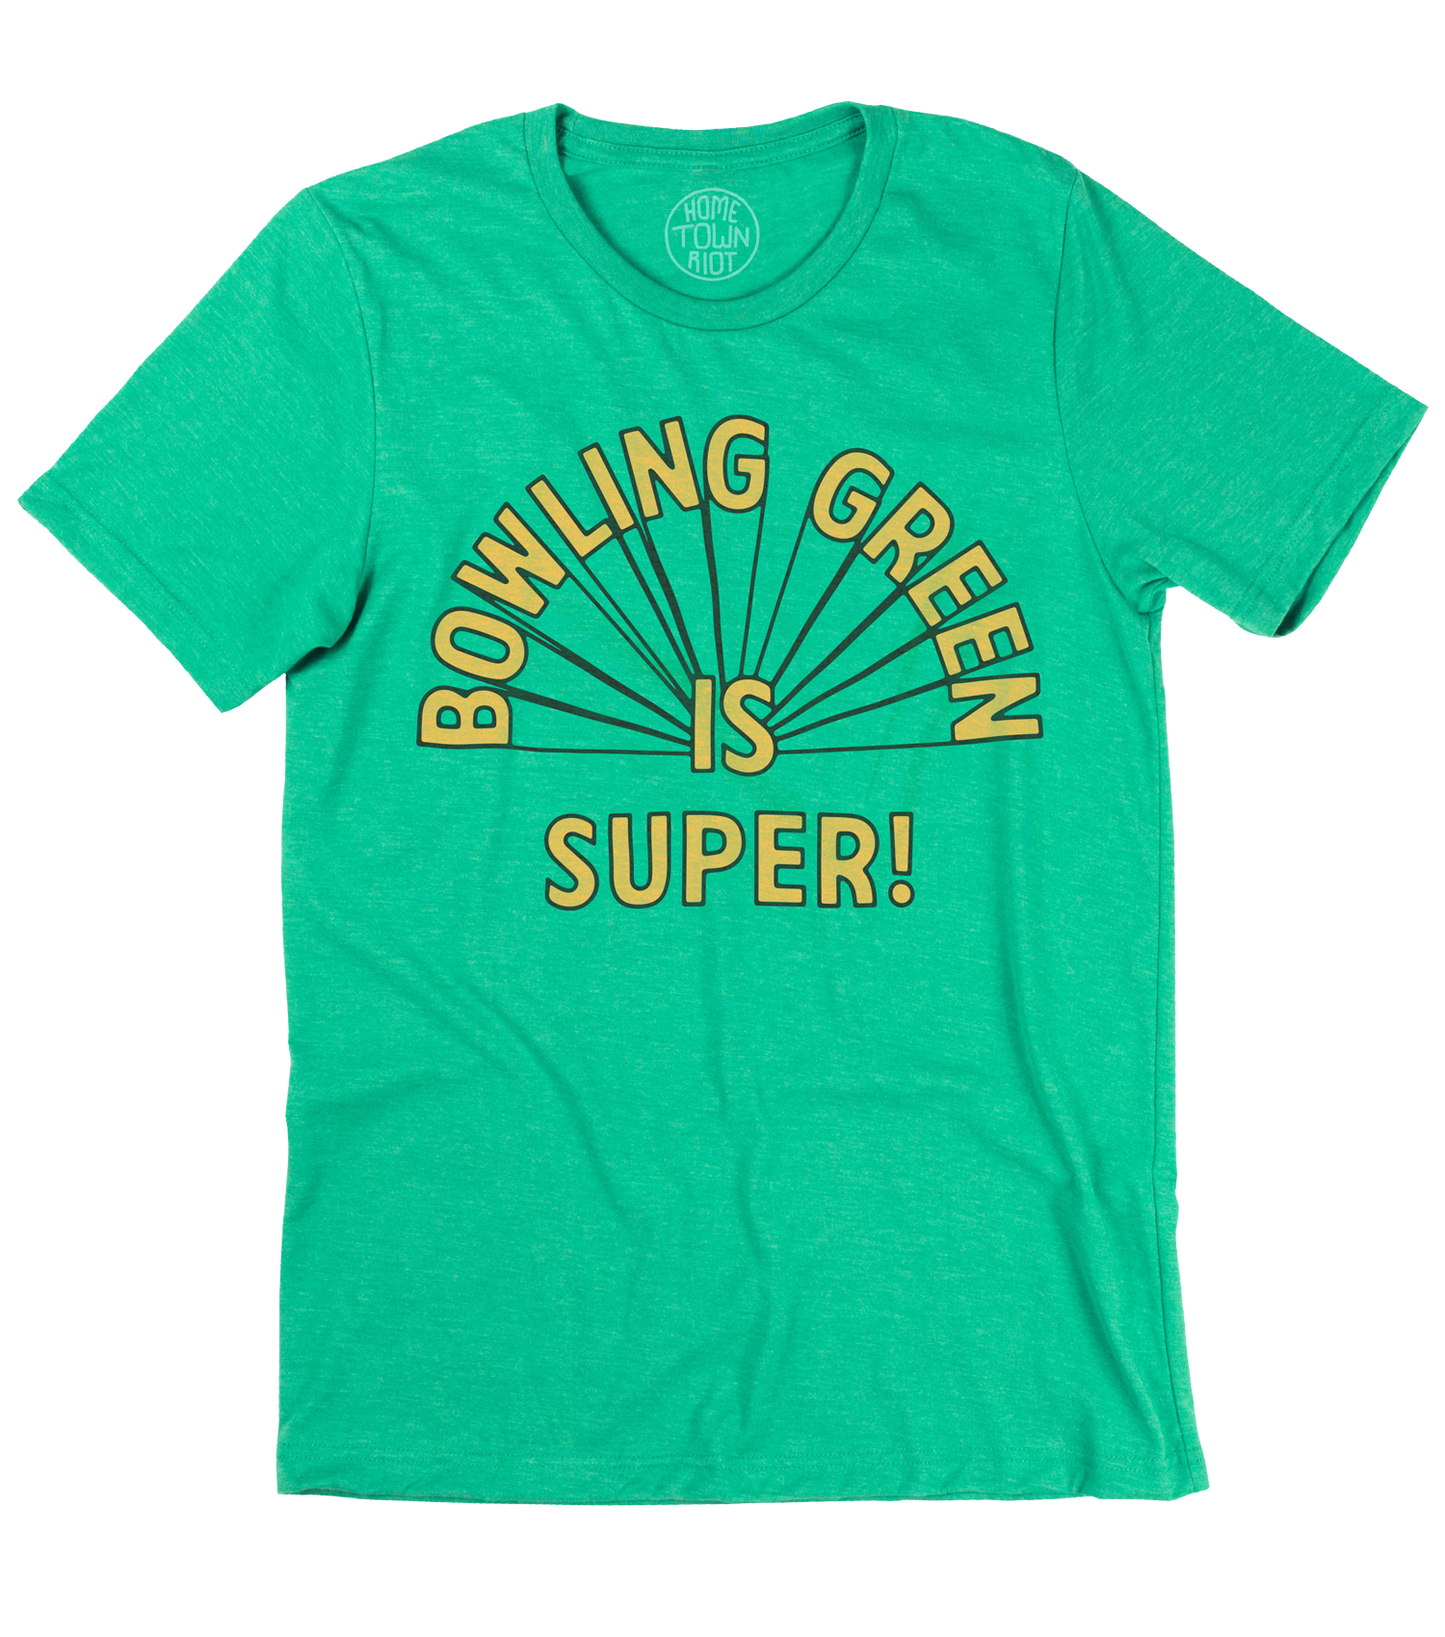 Bowling Green is Super Shirt